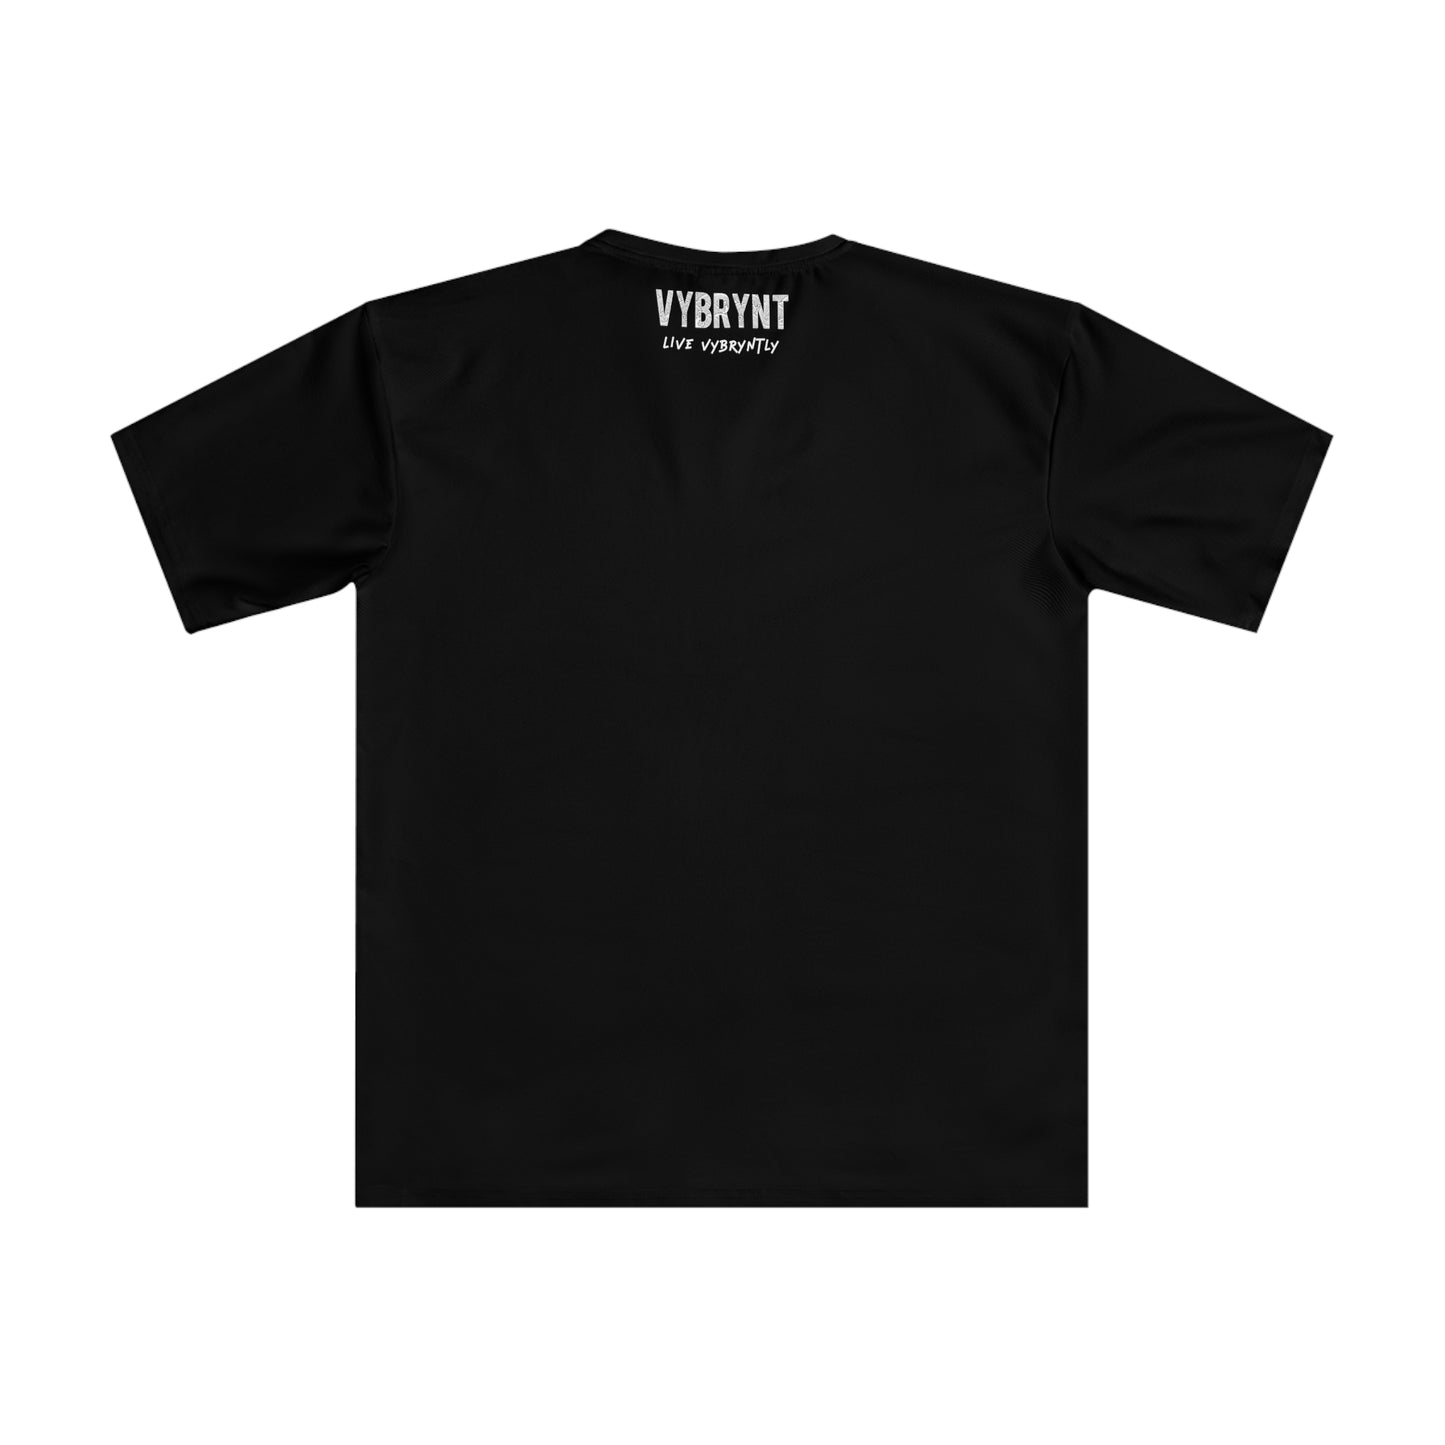 The Awakening Men's Black T-shirt